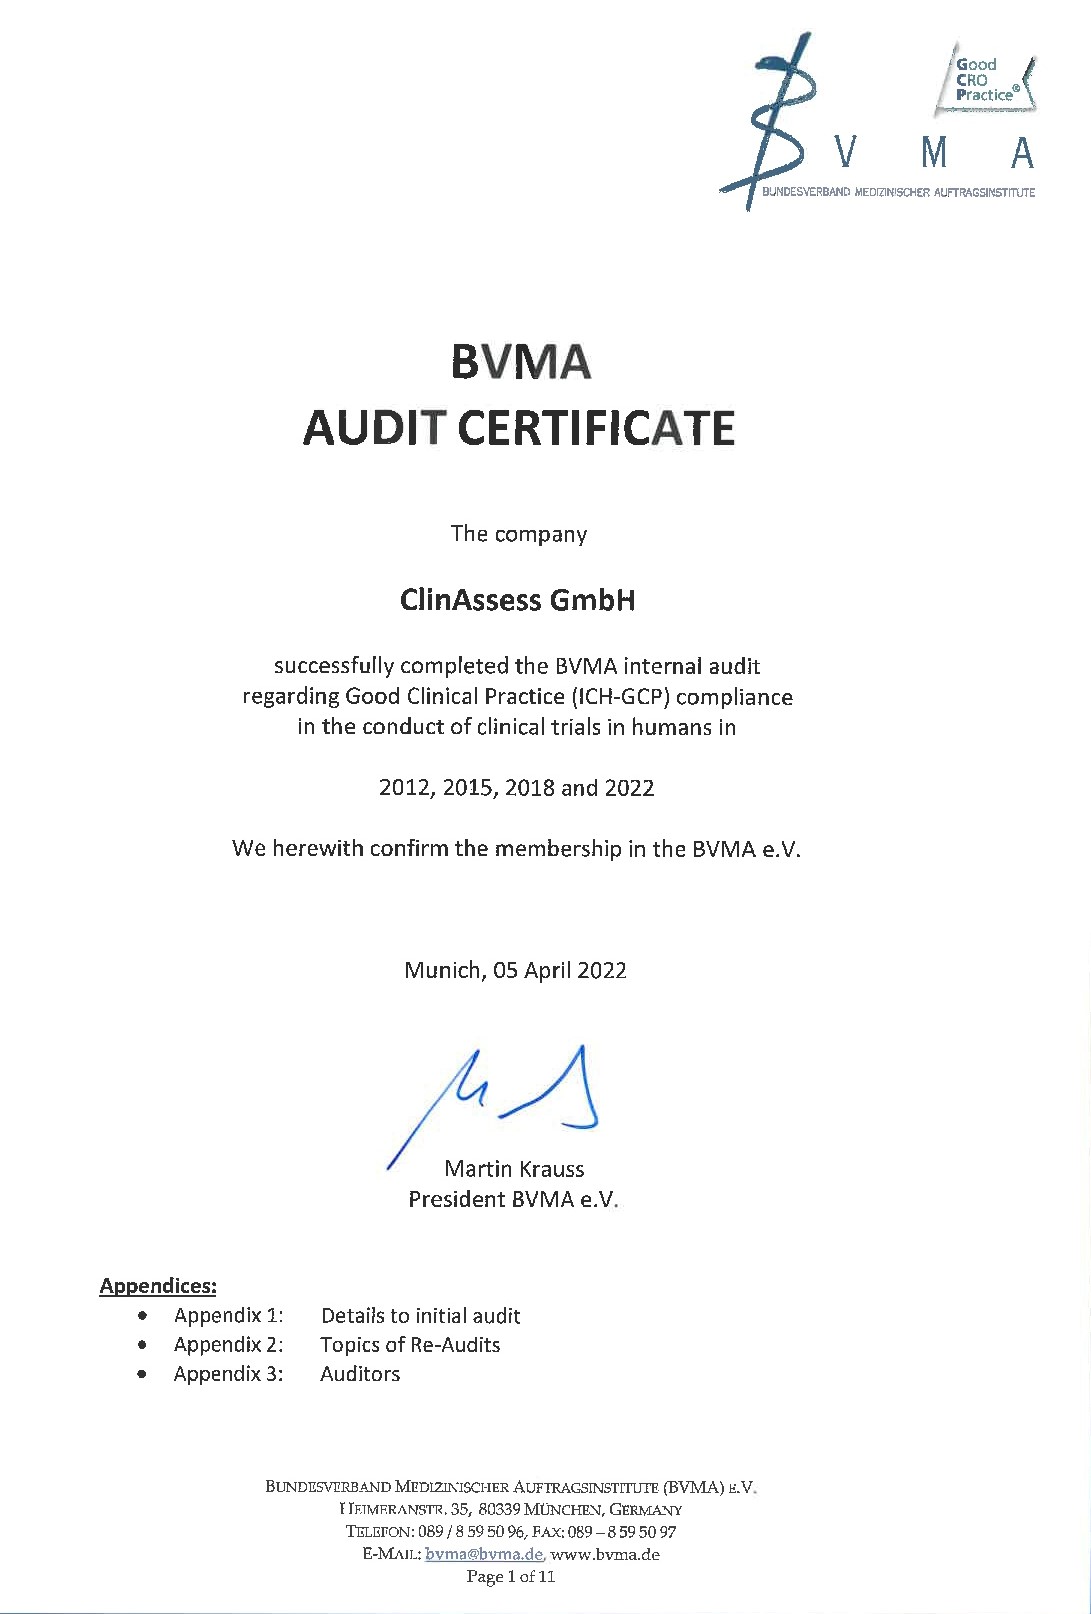 BVMA Audit Certificate